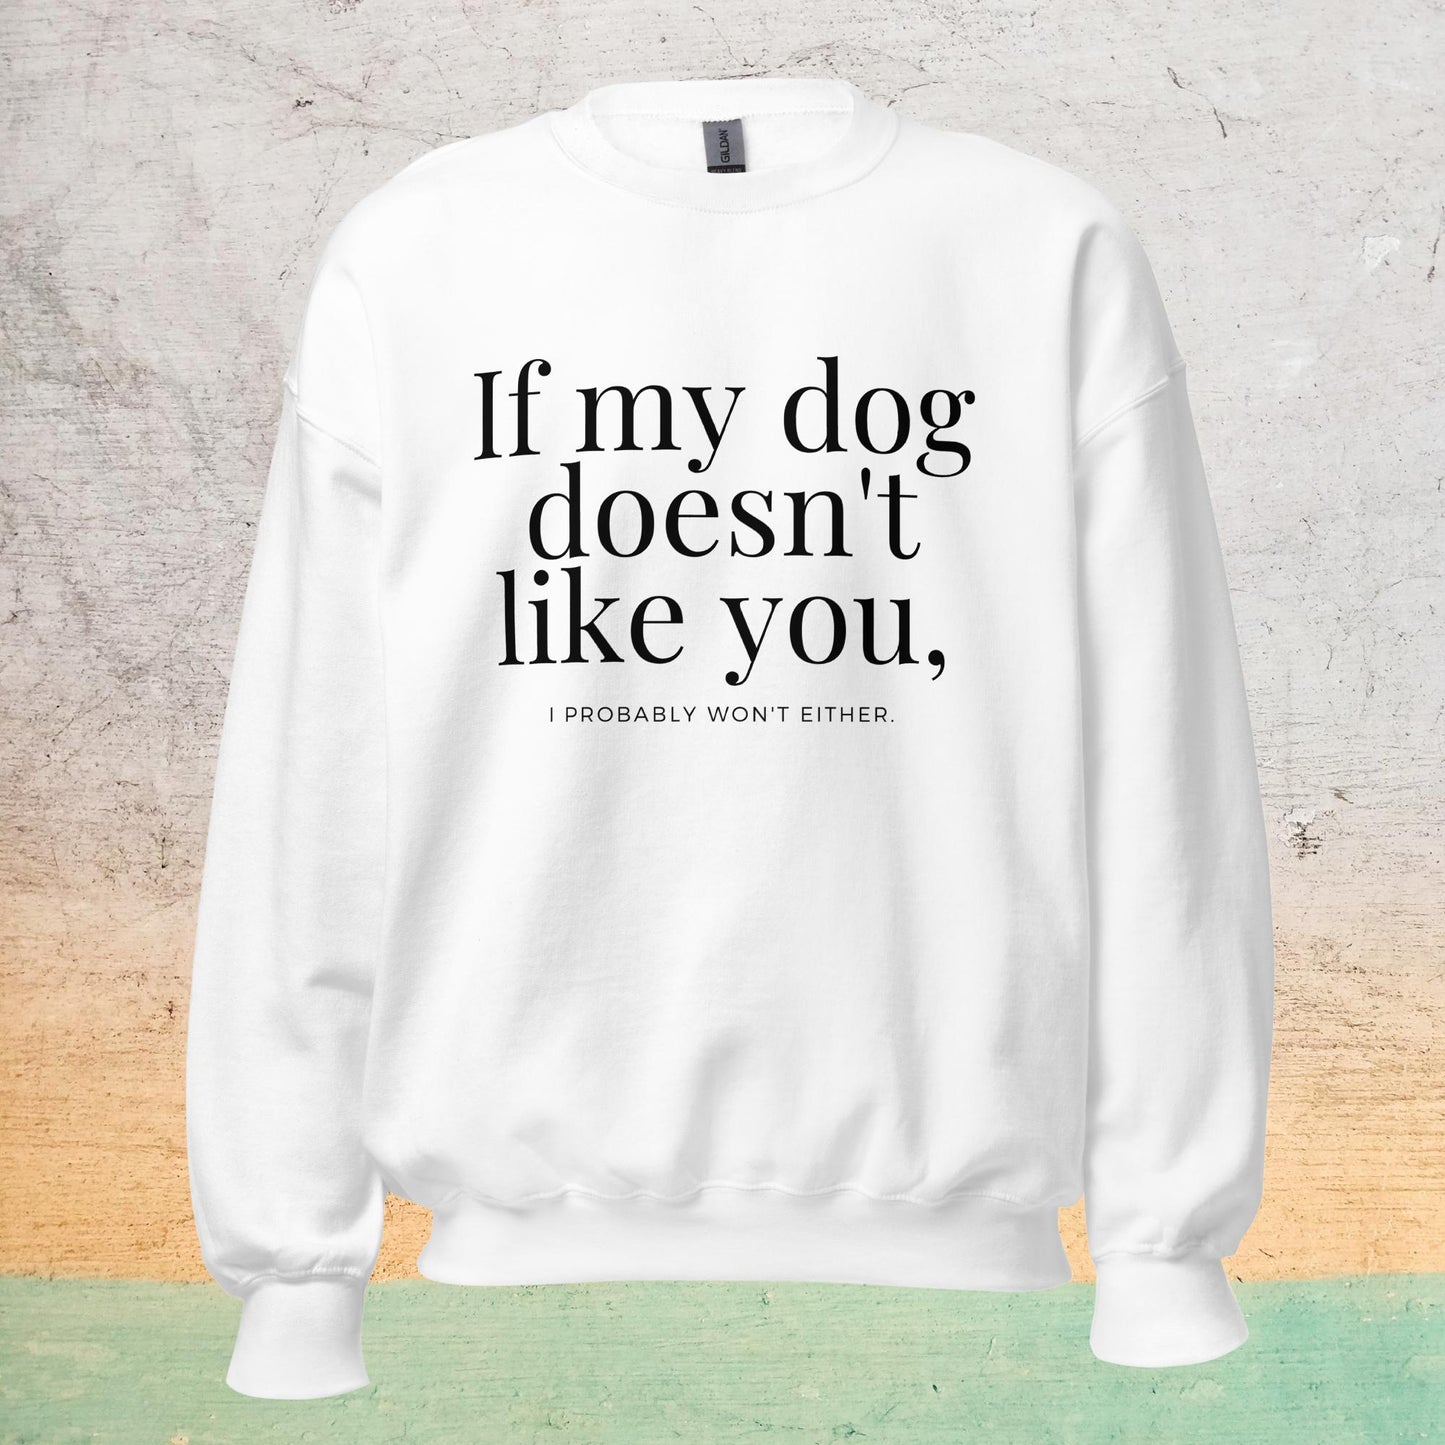 Essential Crew Sweatshirt - If my dog doesn't like you (light)